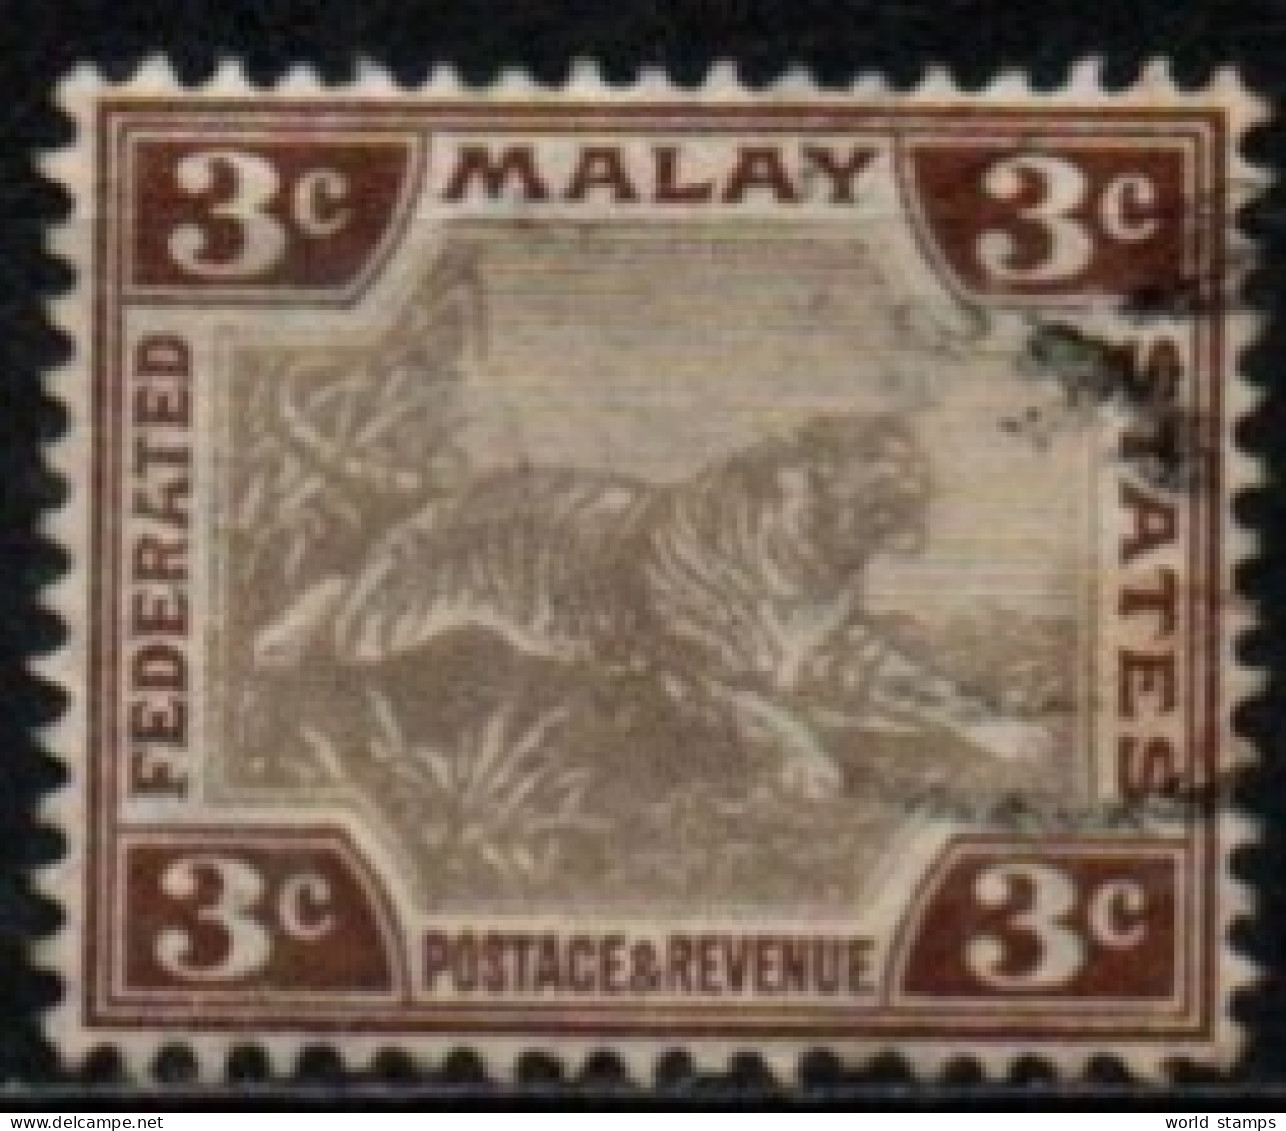 MALAY STATES 1905-11 O - Federated Malay States